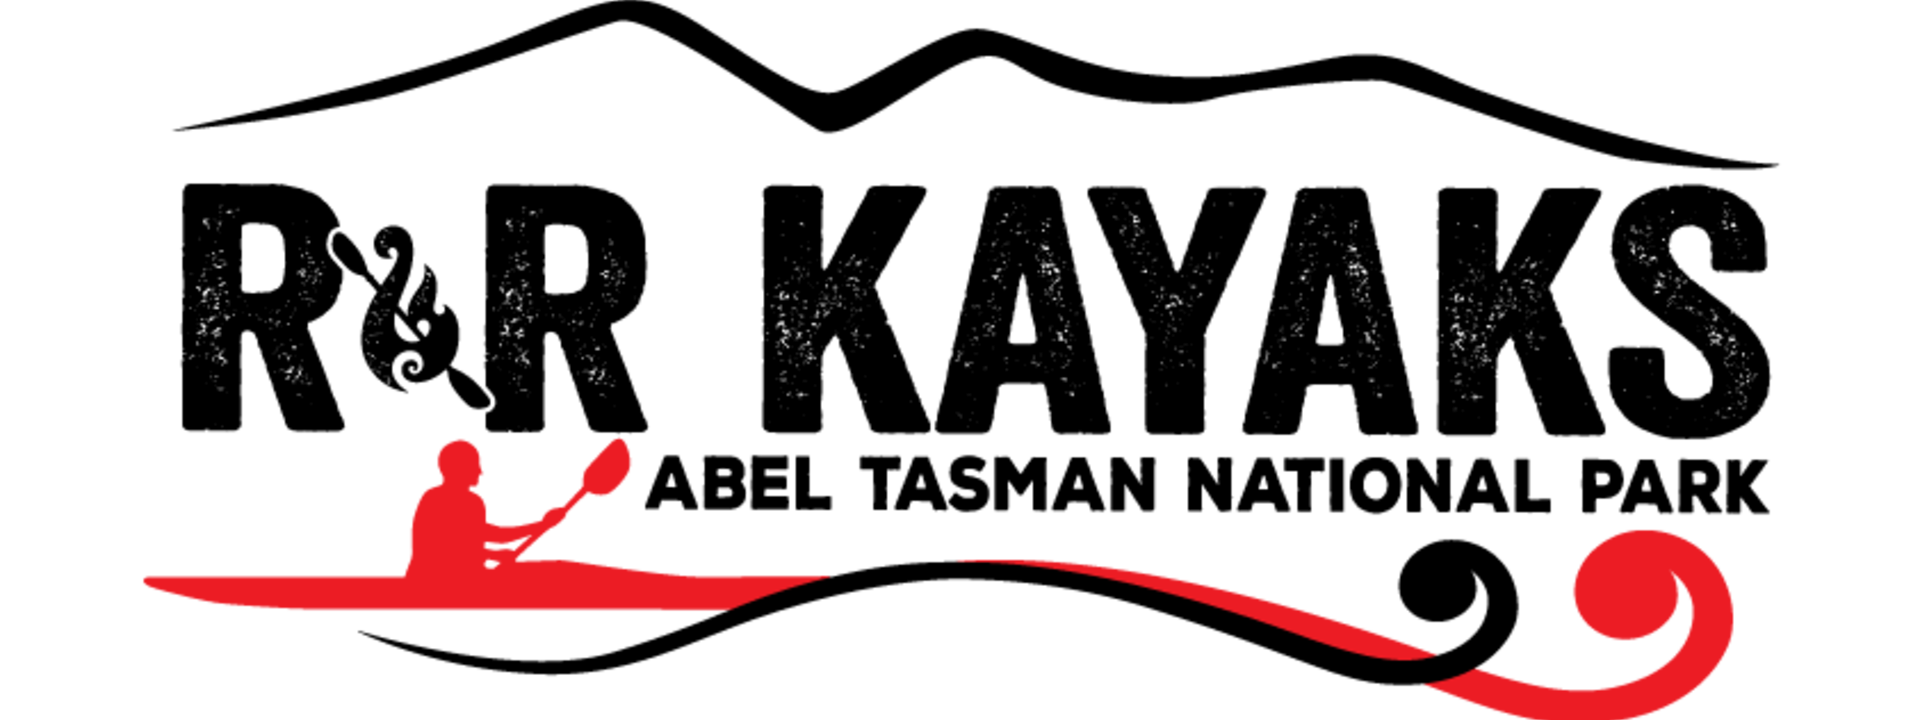 main-logo-2021.png